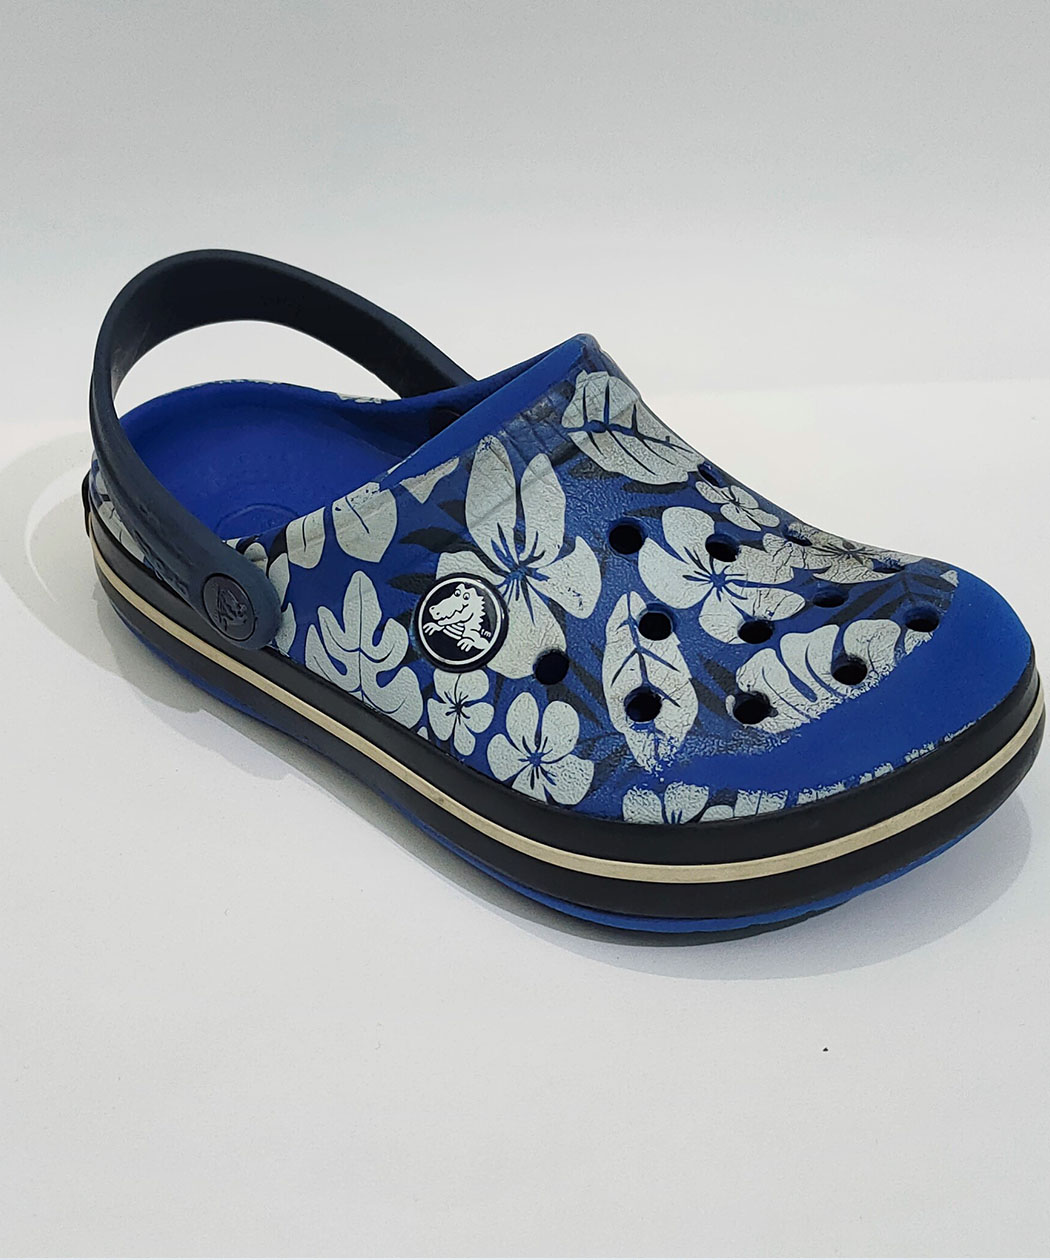 Crocs Schuhe Kinder cerulean blue navy 2